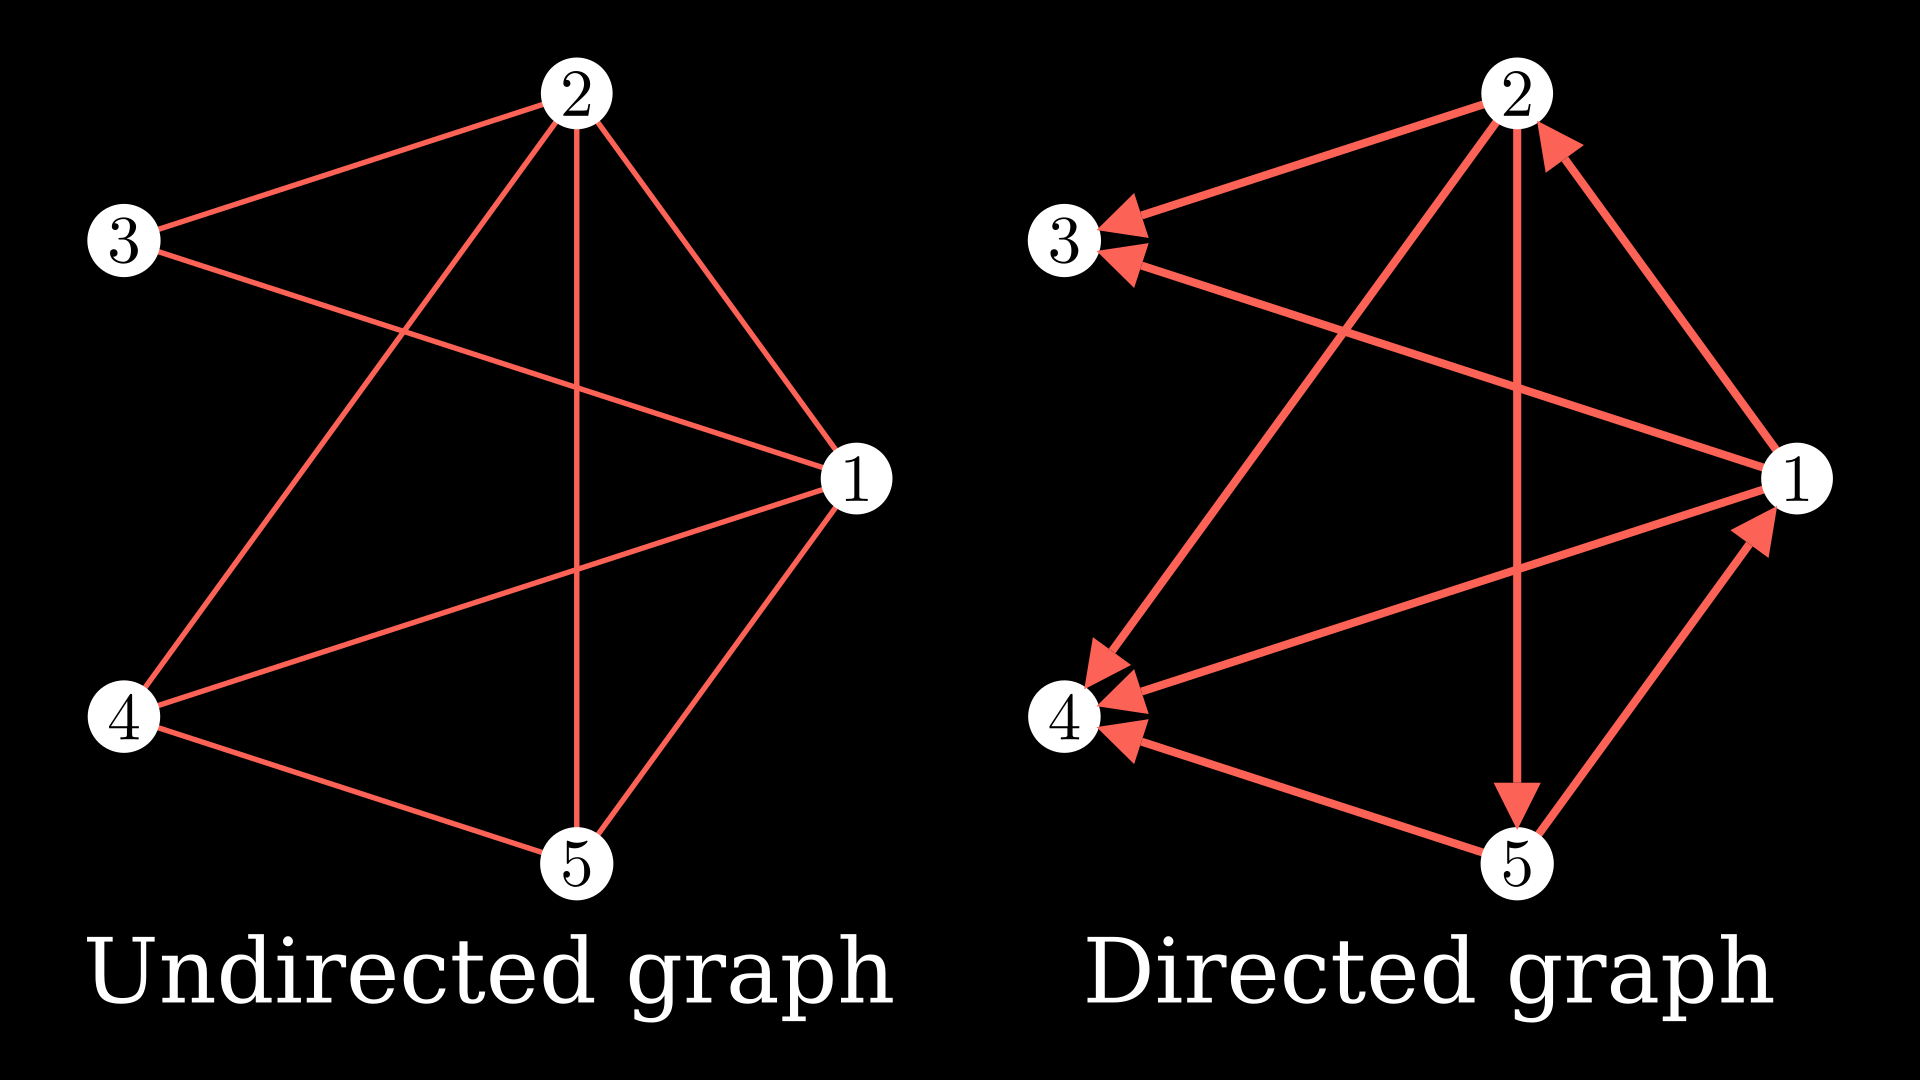 A simple representation of a graph